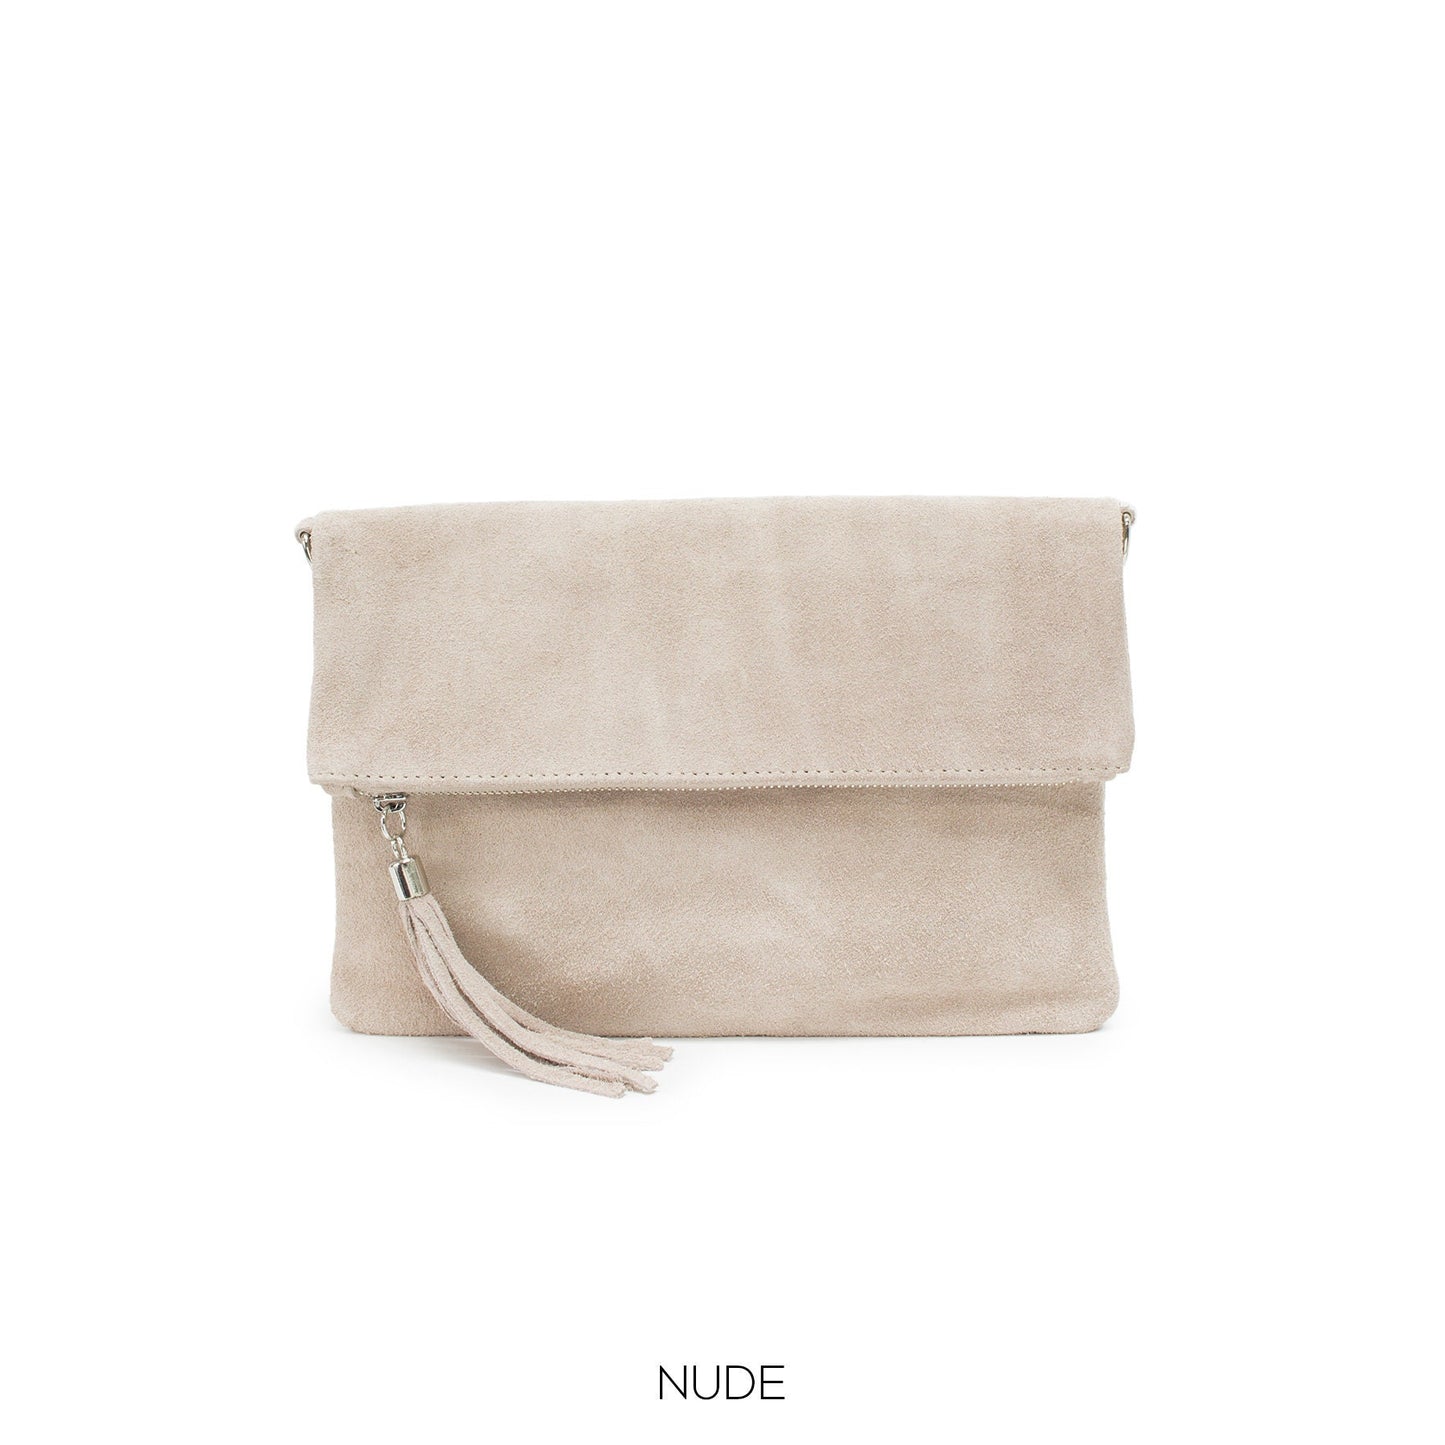 Nude Suede Clutch Bag